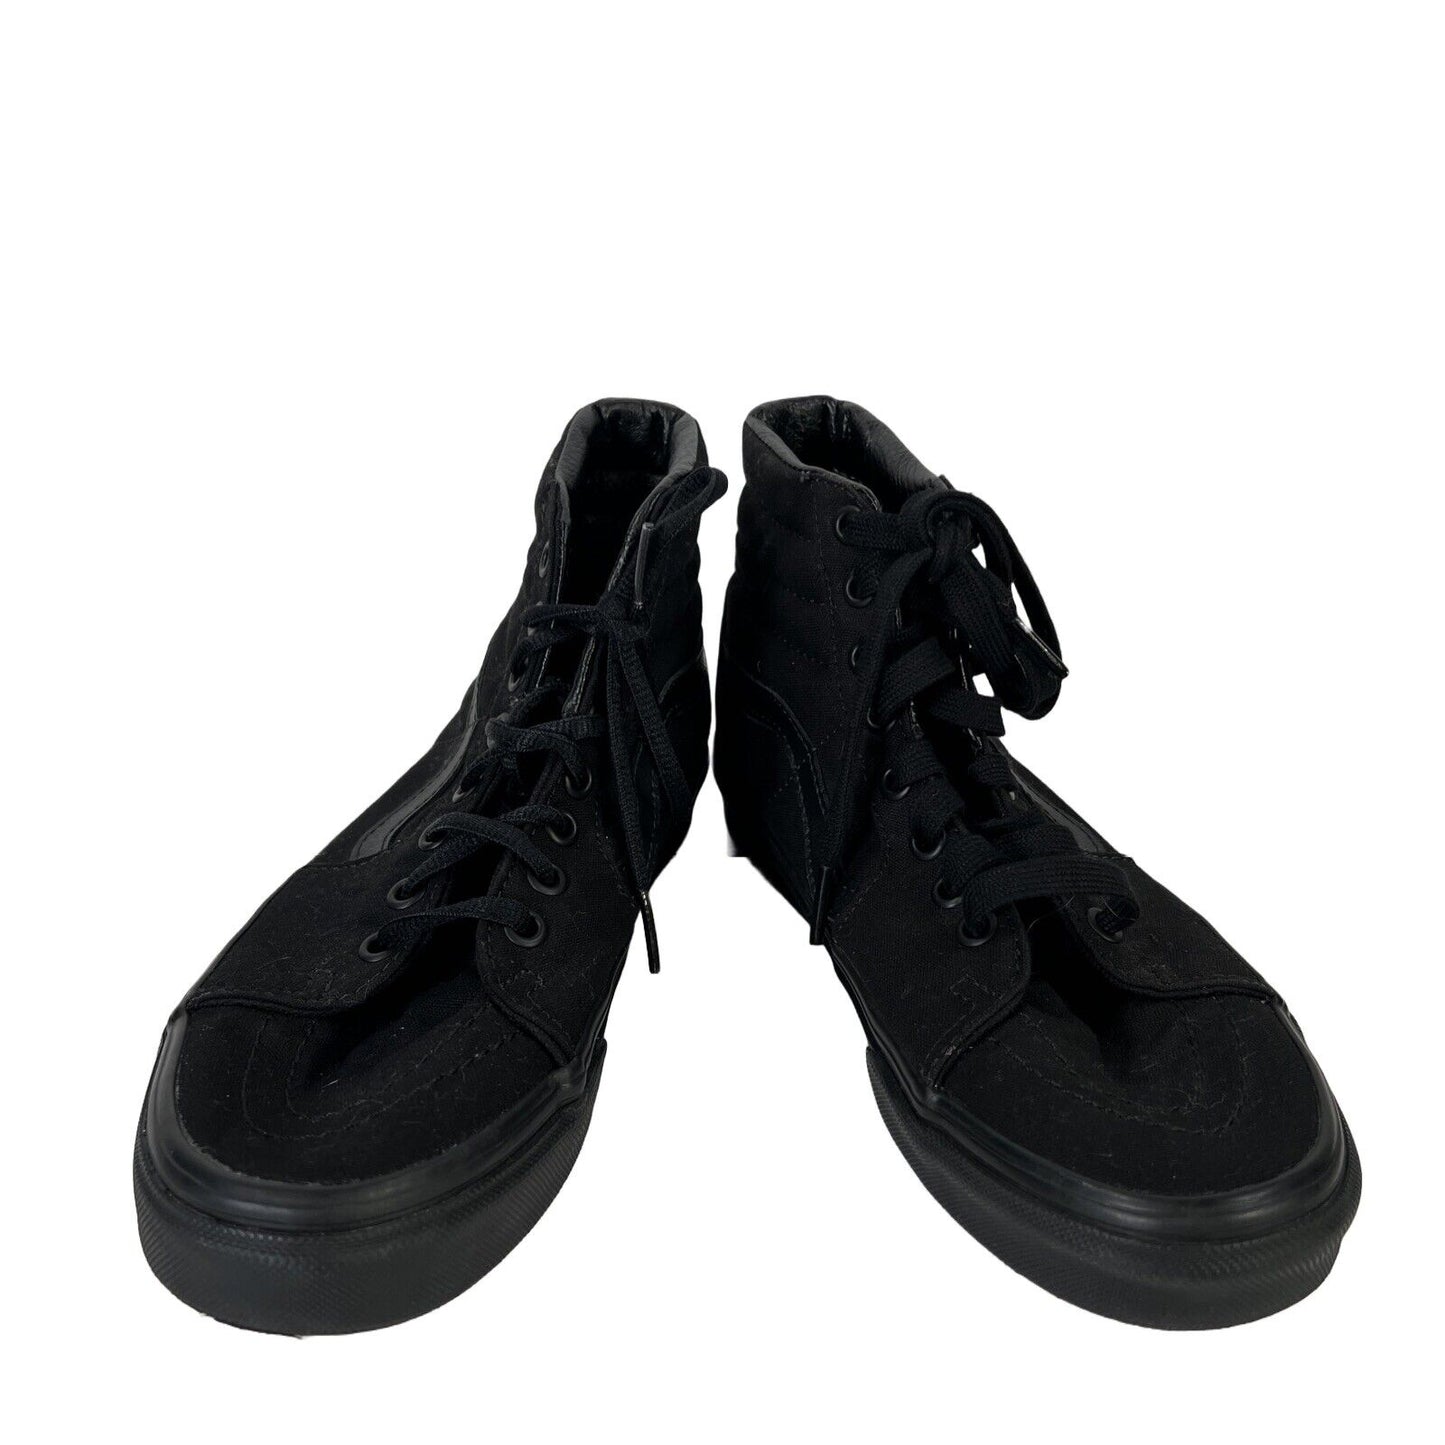 Vans Unisex Black Canvas Sk8 Hi-Top Lace Up Sneakers - Women's 7